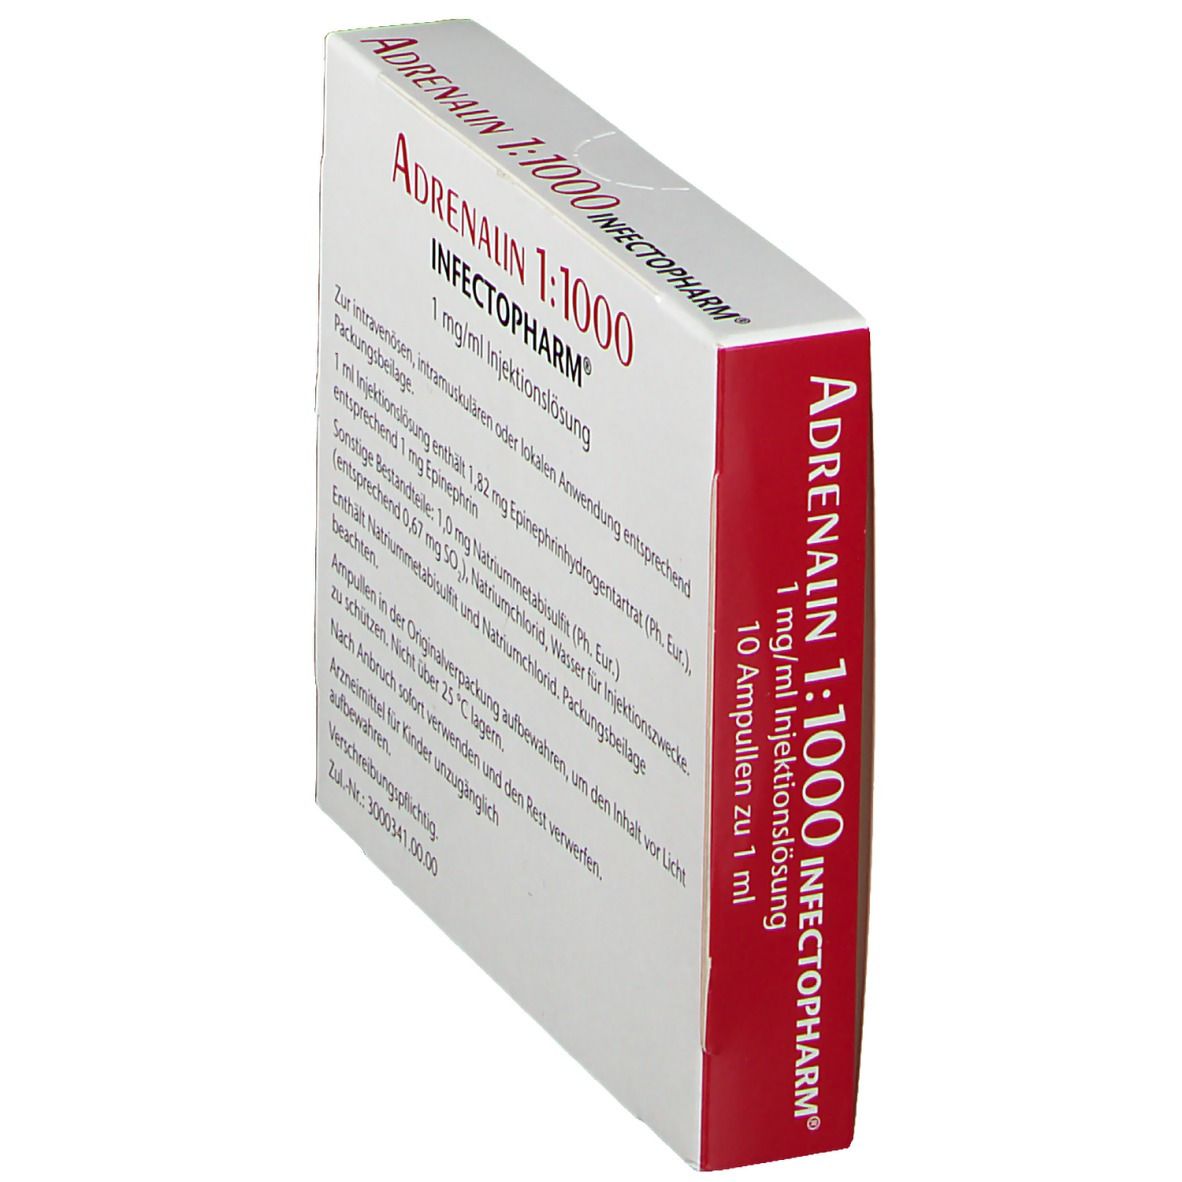 Adrenalin 1:1000 InfectoPharm® 1 mg/ml